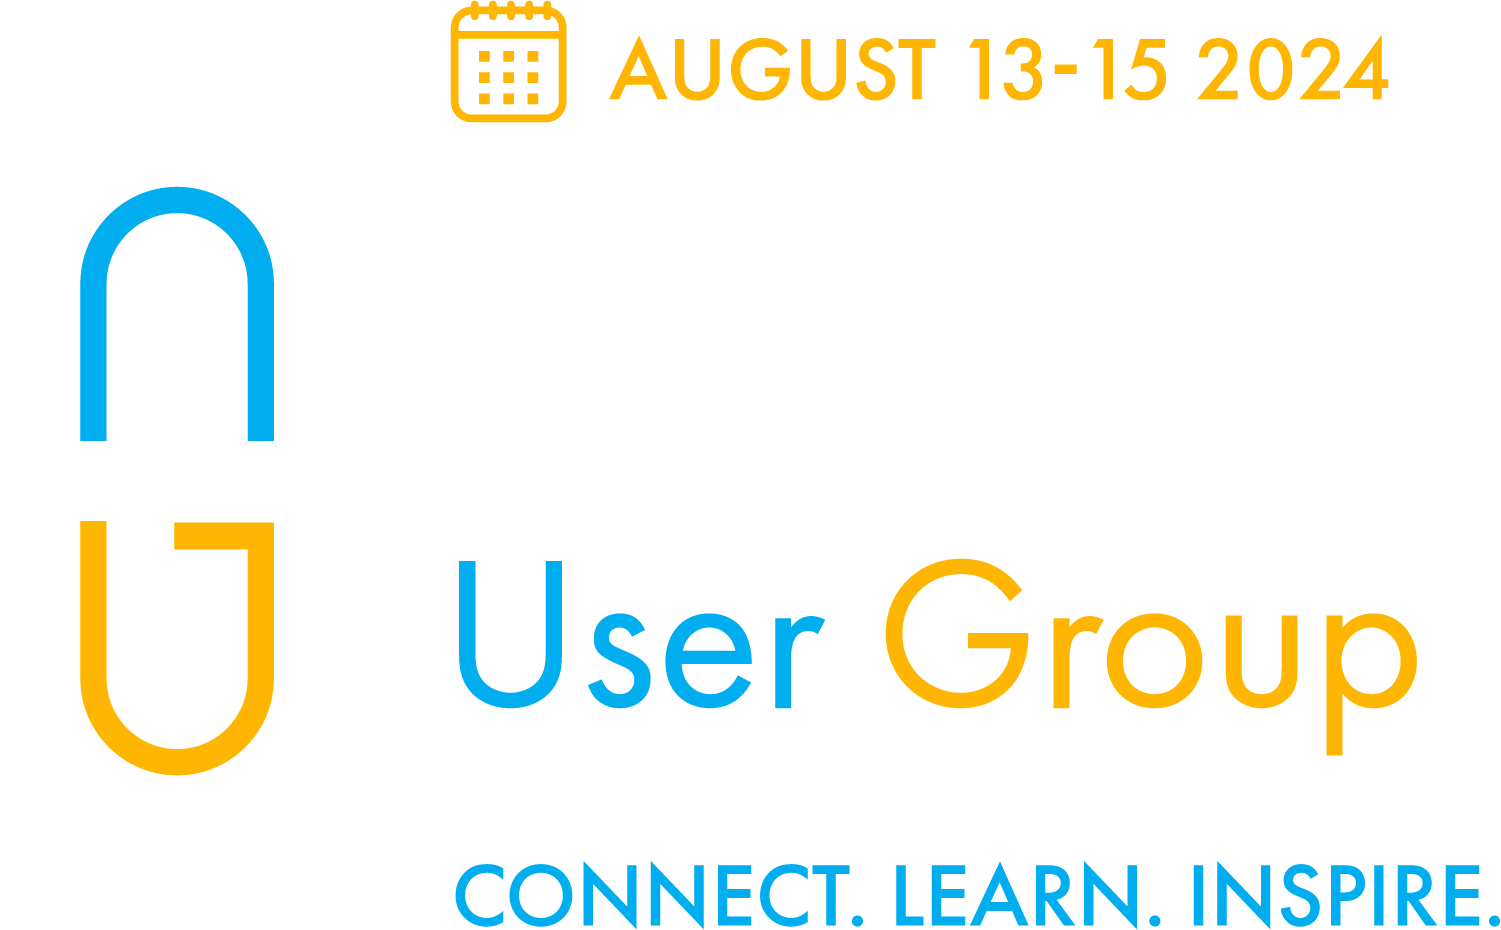 ELLKAY User Group 2024